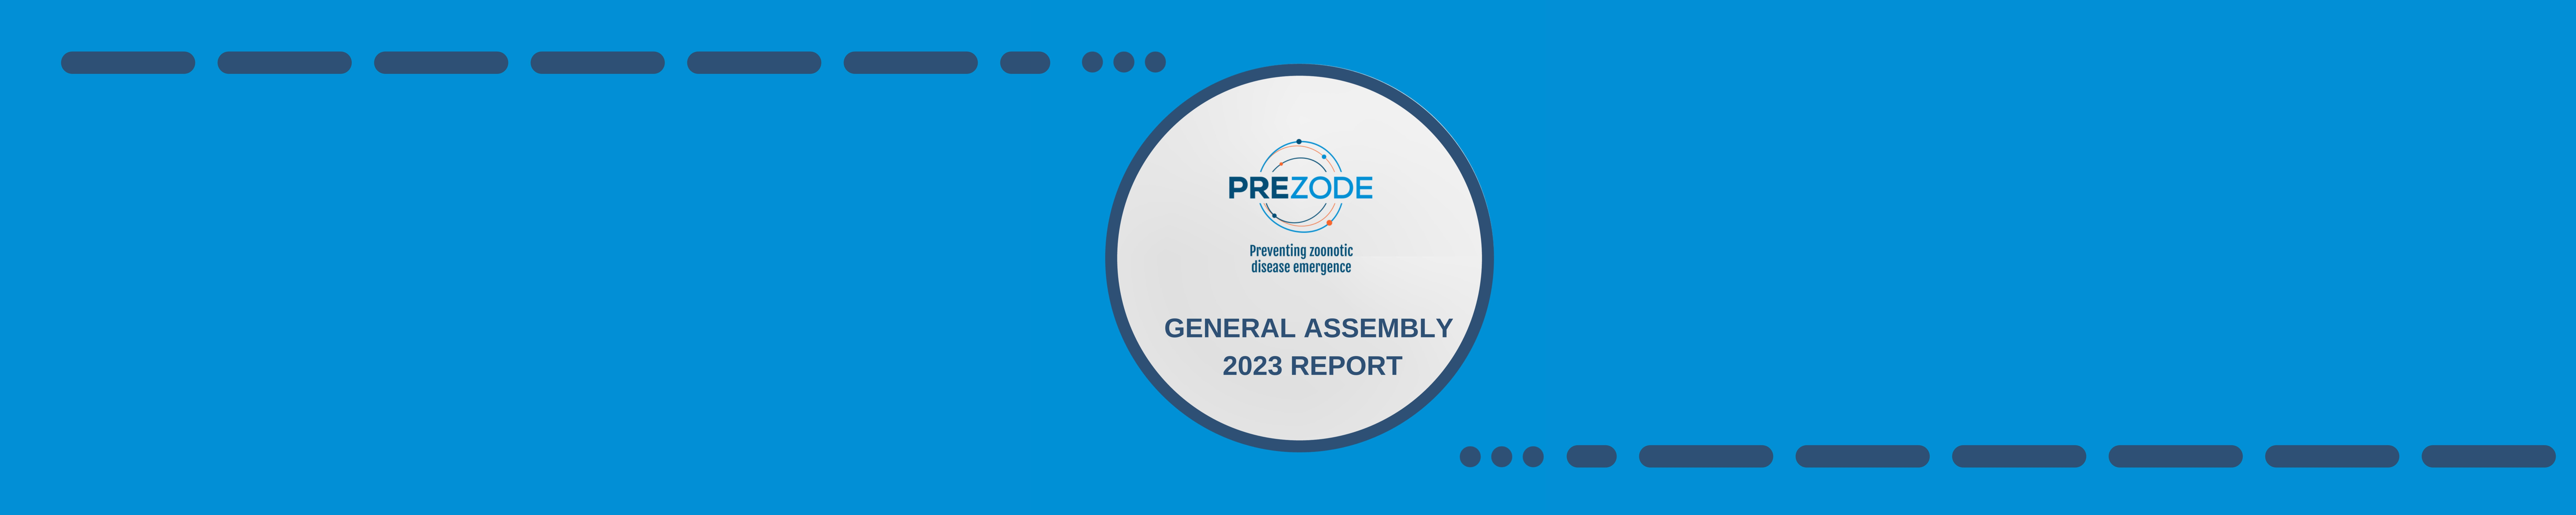 PREZODE GENERAL ASSEMBLY 2023 - DRAFT REPORT